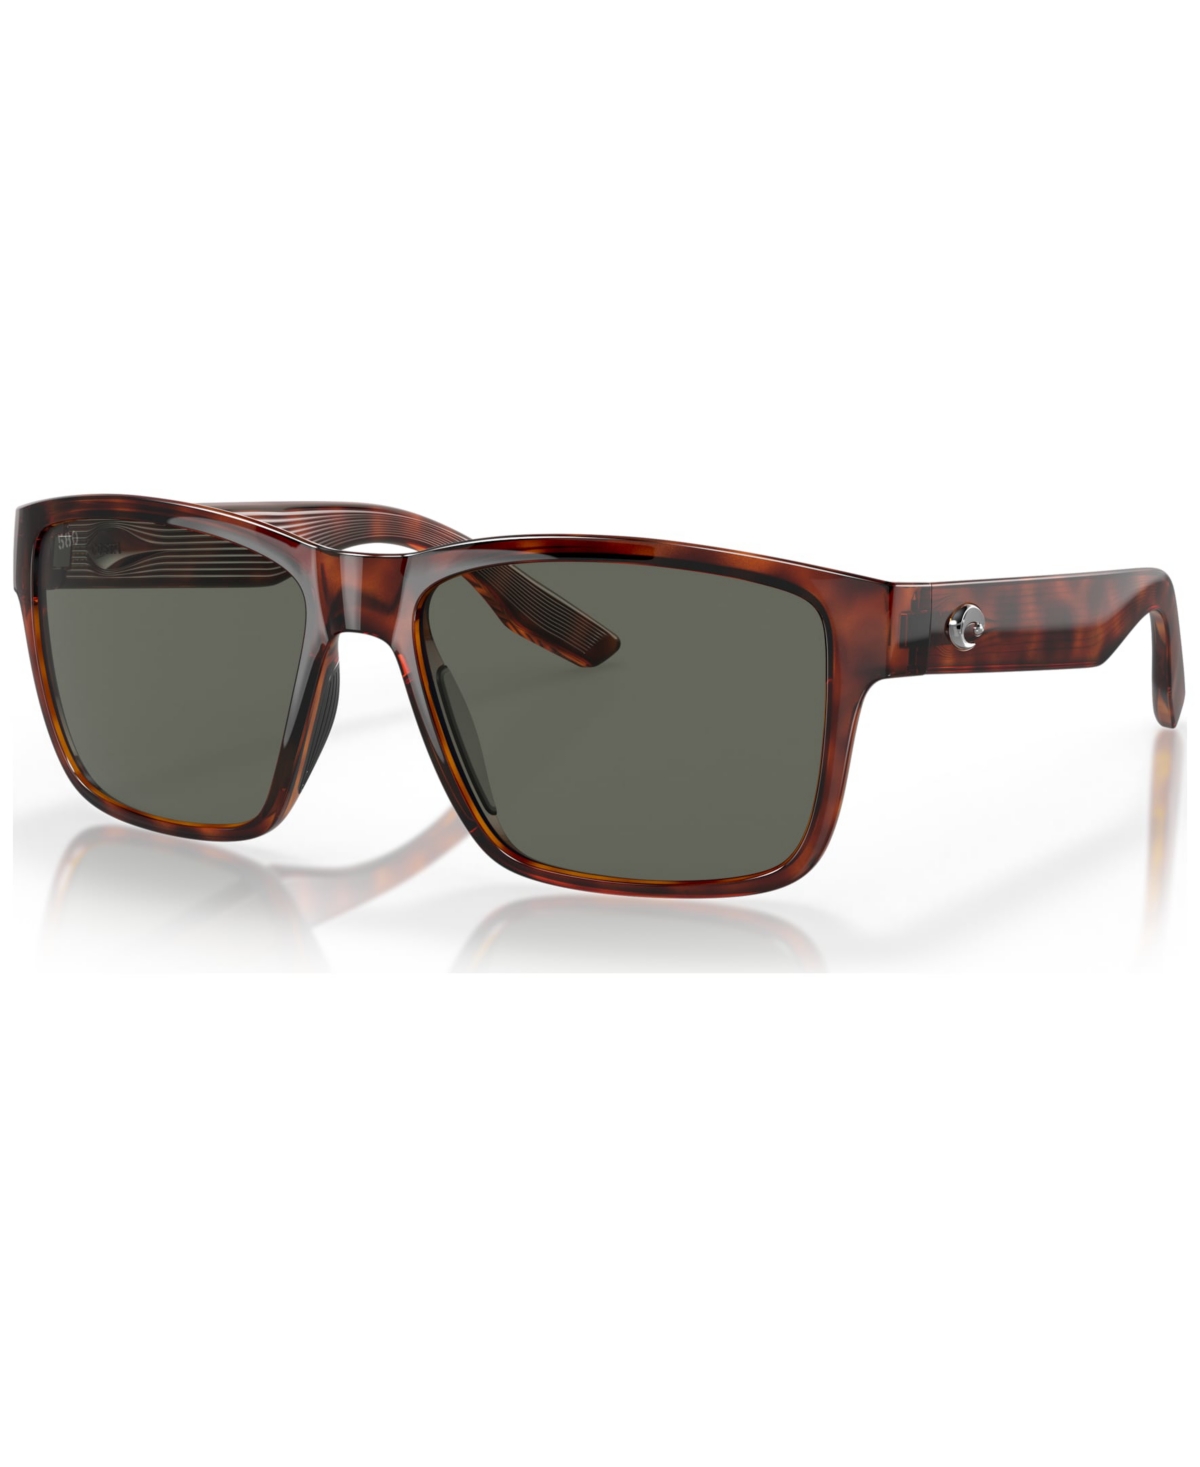 Men's Paunch Polarized Sunglasses, 6S9049 - Tortoise